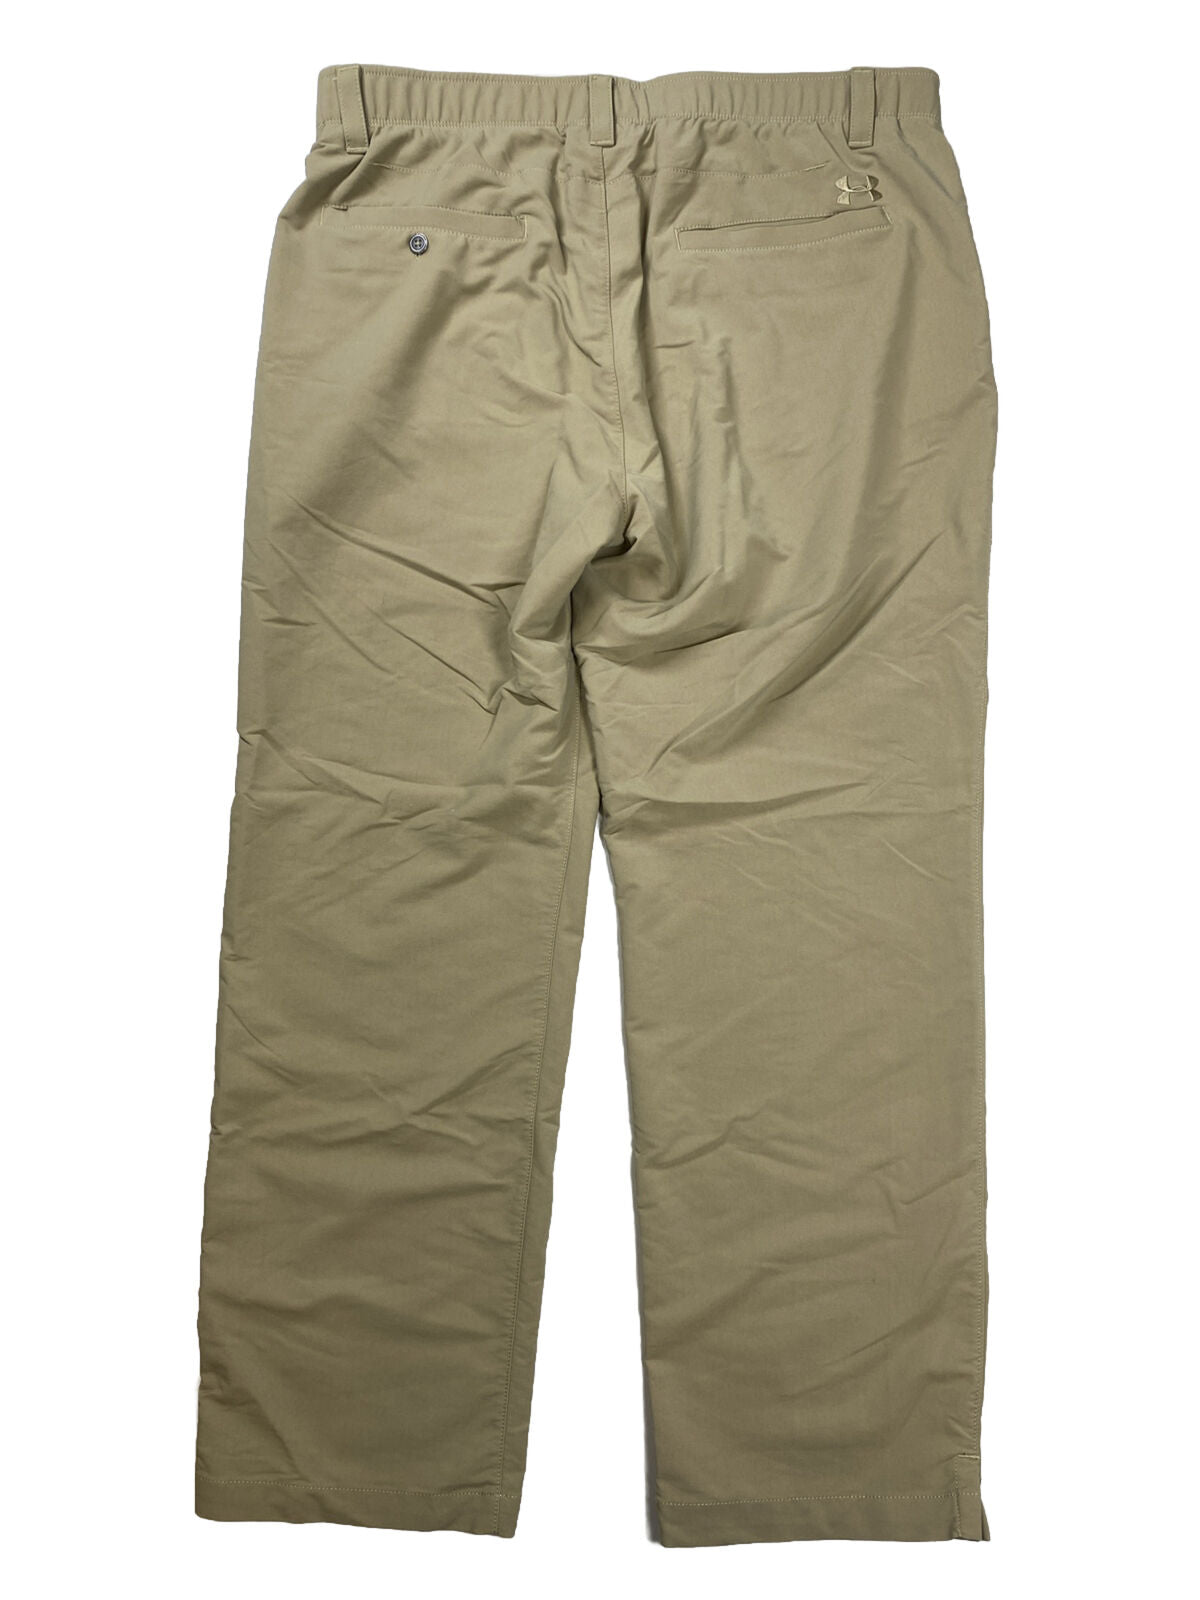 Under Armour Pantalones de golf elásticos beige para hombre - 38x30